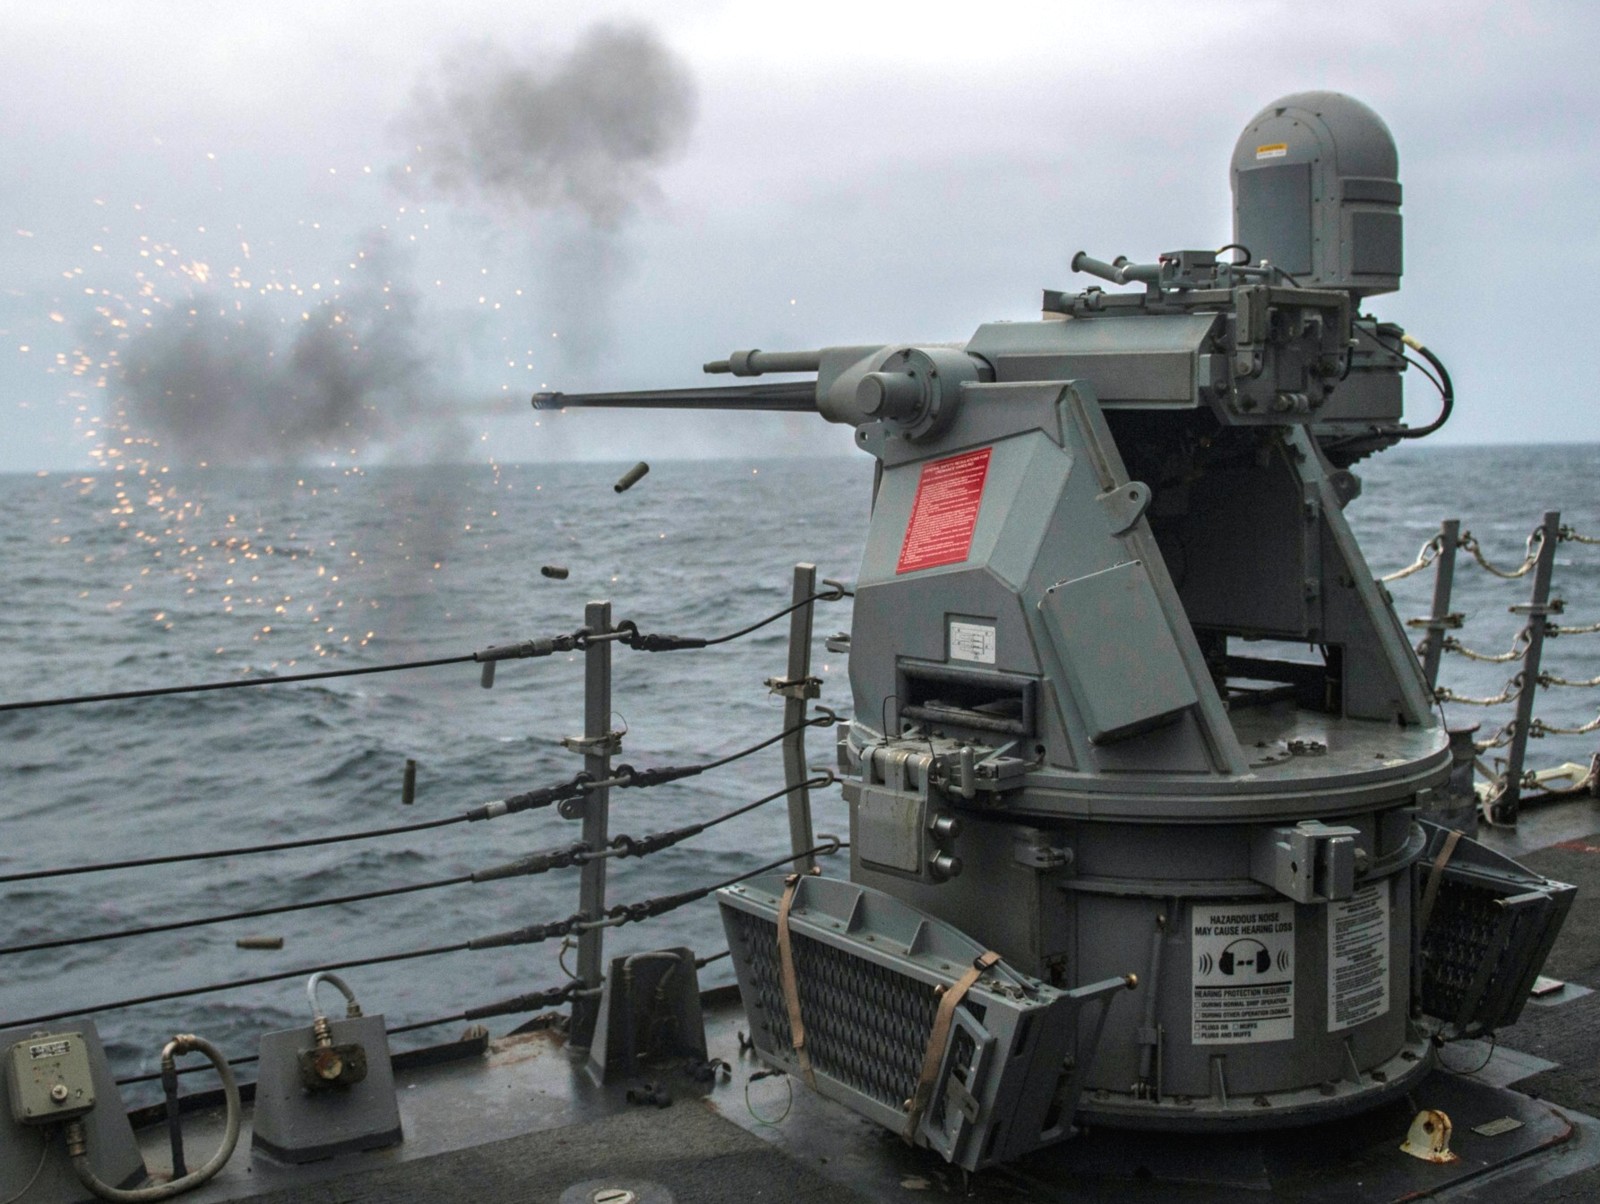 ddg-64 uss carney destroyer arleigh burke class navy 12 mk.38 25mm machine gun